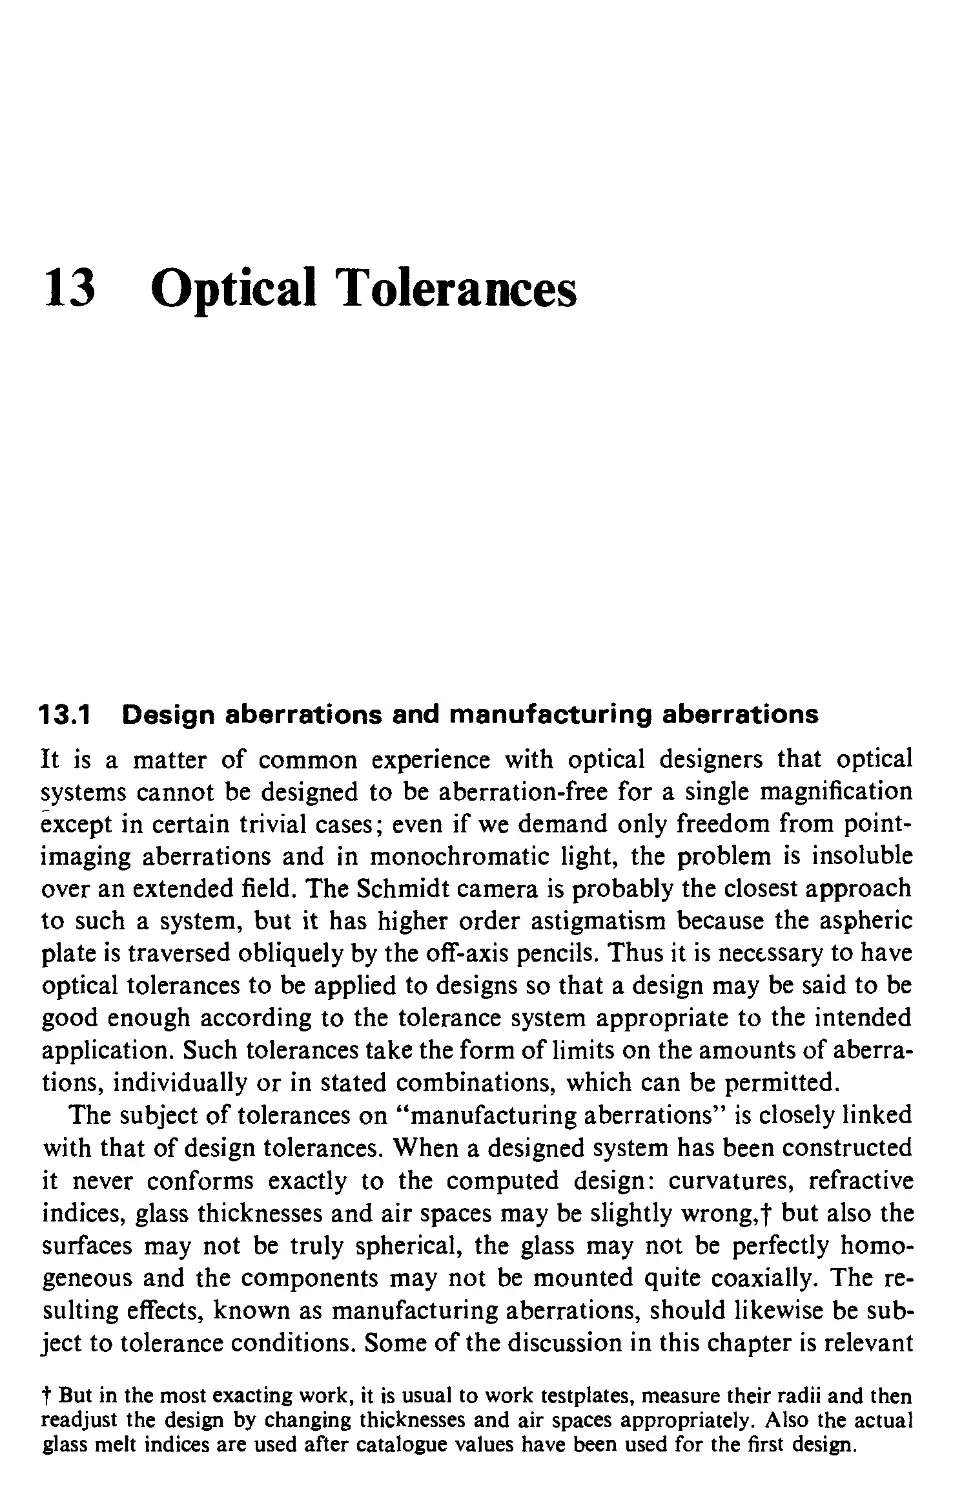 13 Optical tolerances